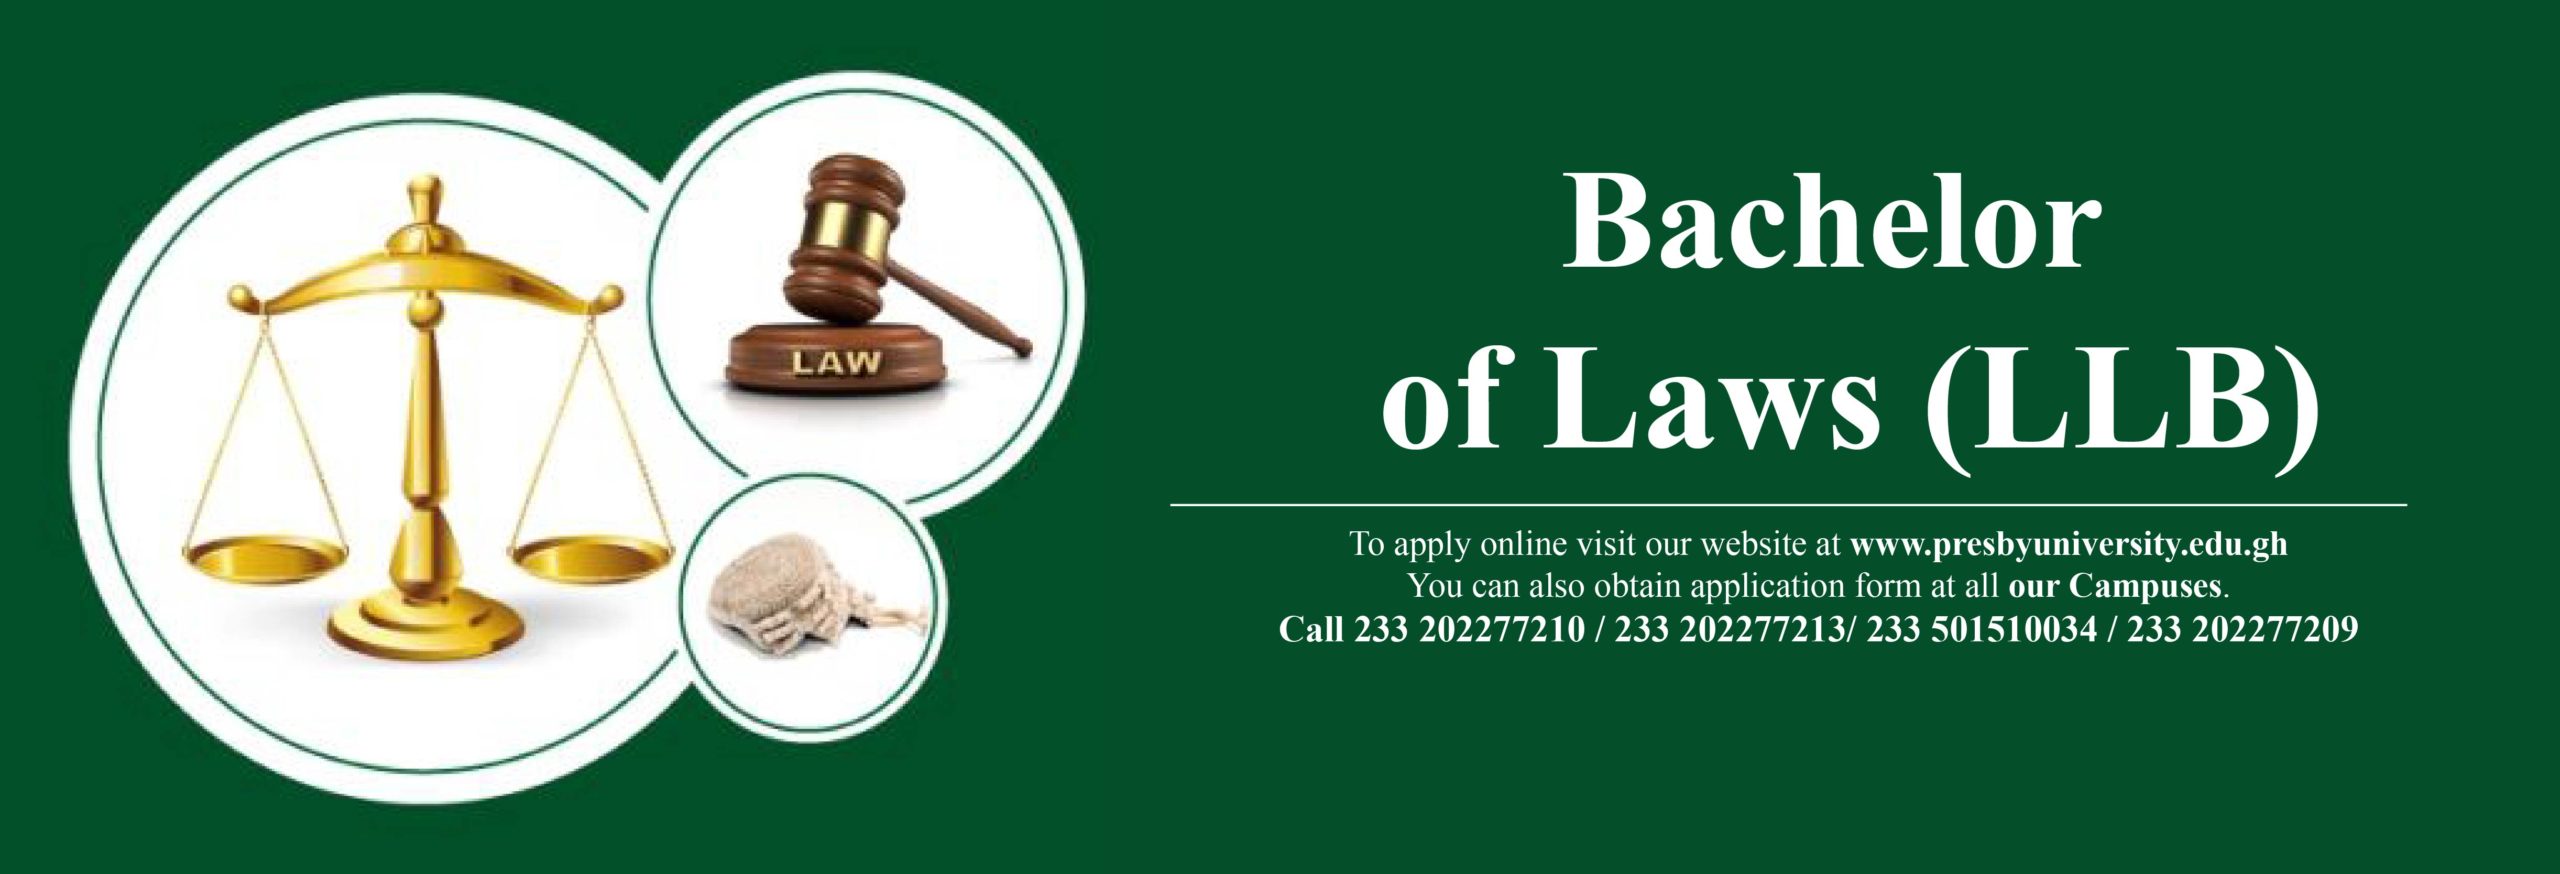 Bachelor of Law-03